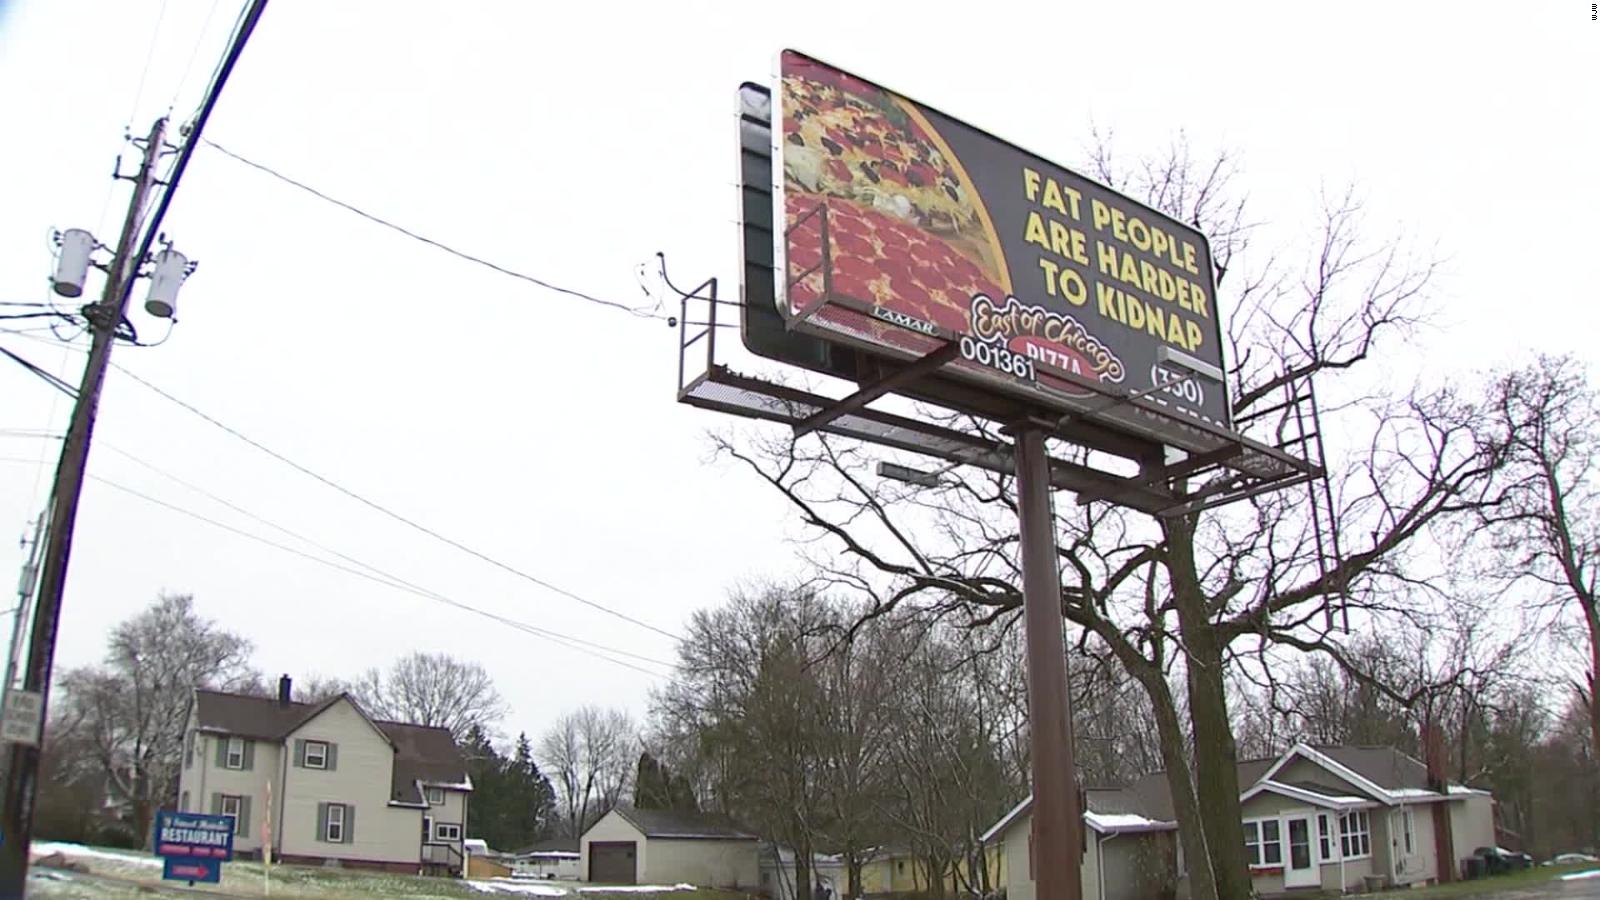 A Pizza Shop Took Down Its Billboard Making Light Of Human Trafficking